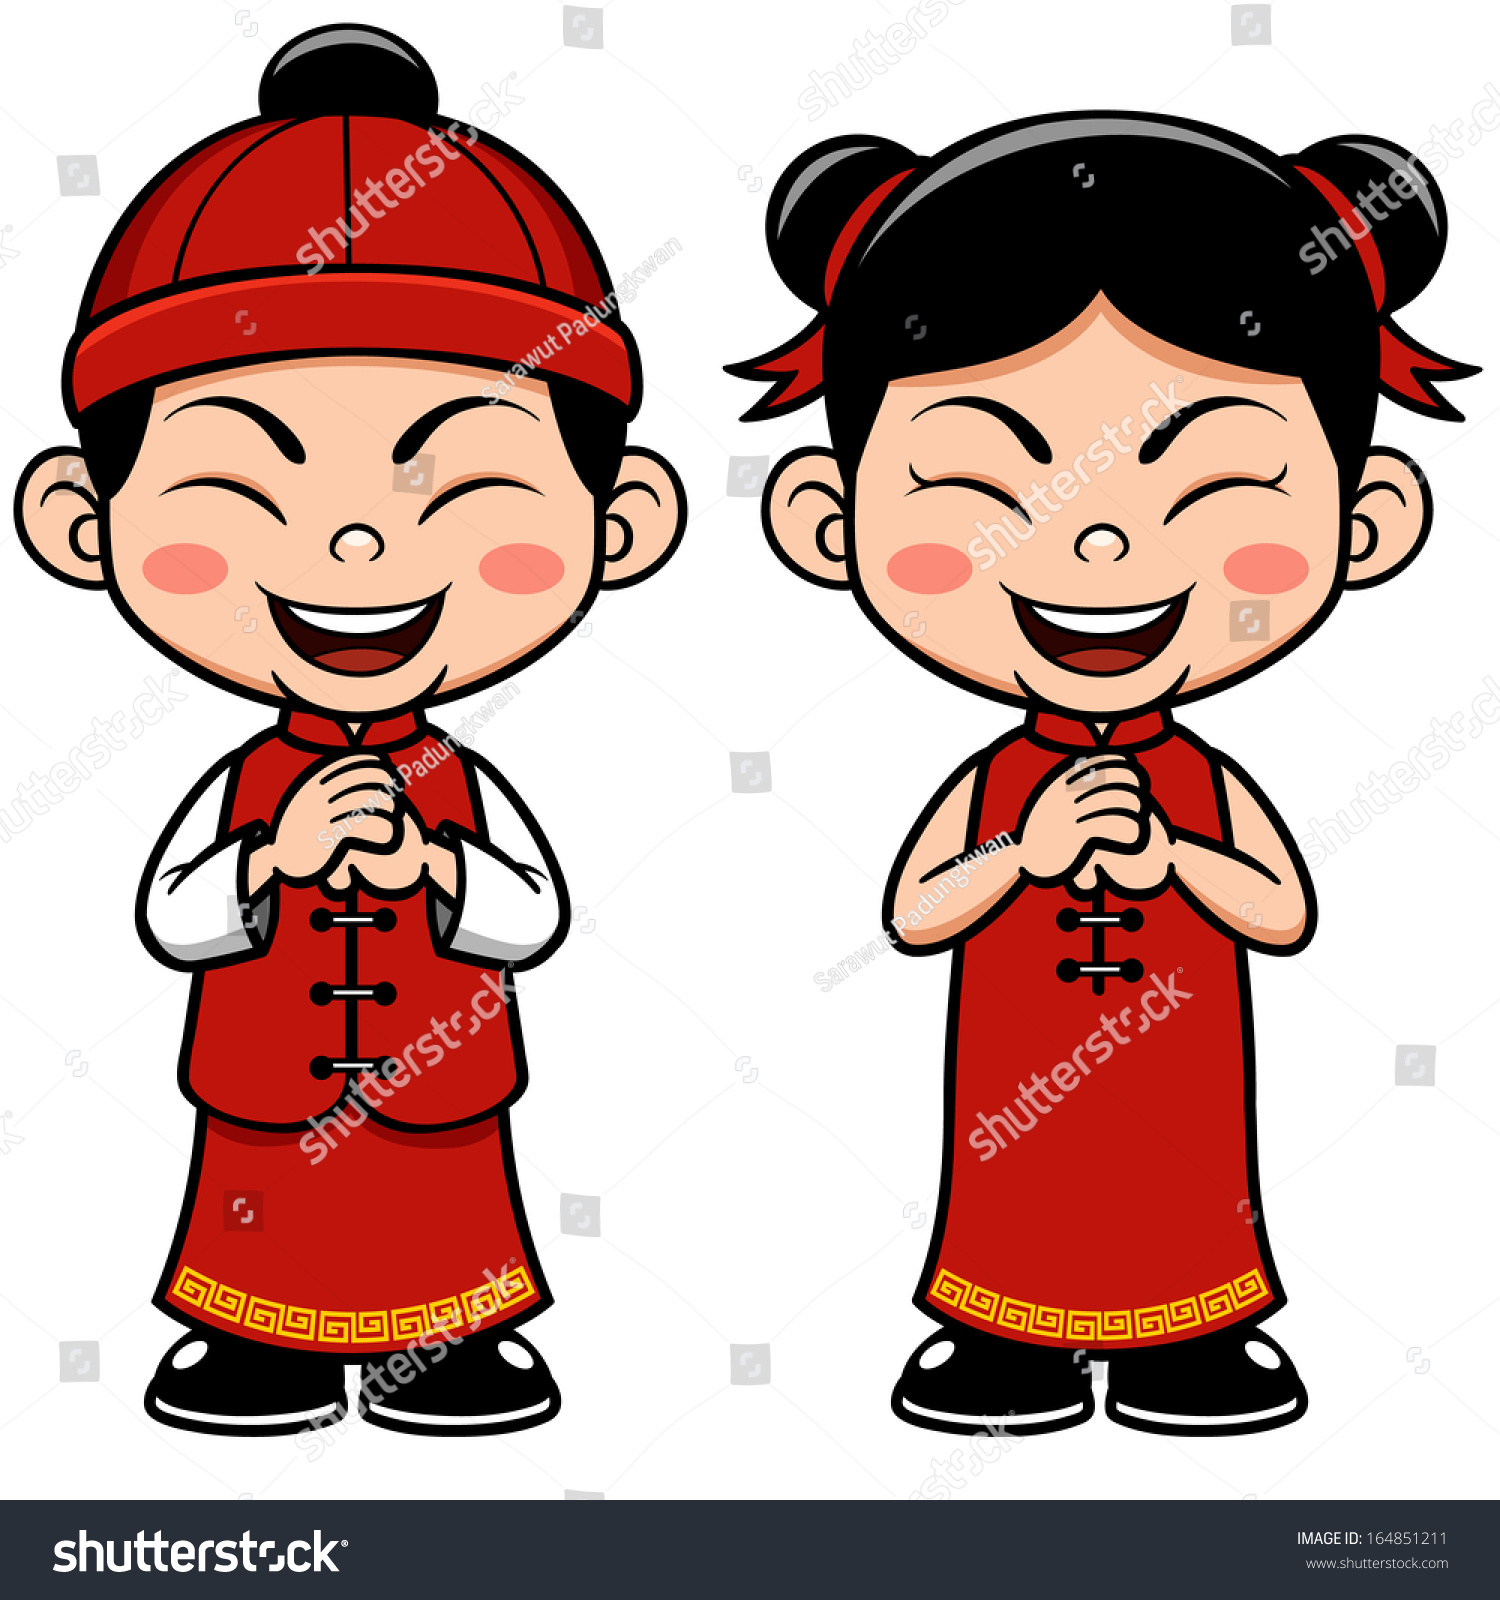 Vector Illustration Chinese Kids Stock Vector 164851211 - Shutterstock1500 x 1600